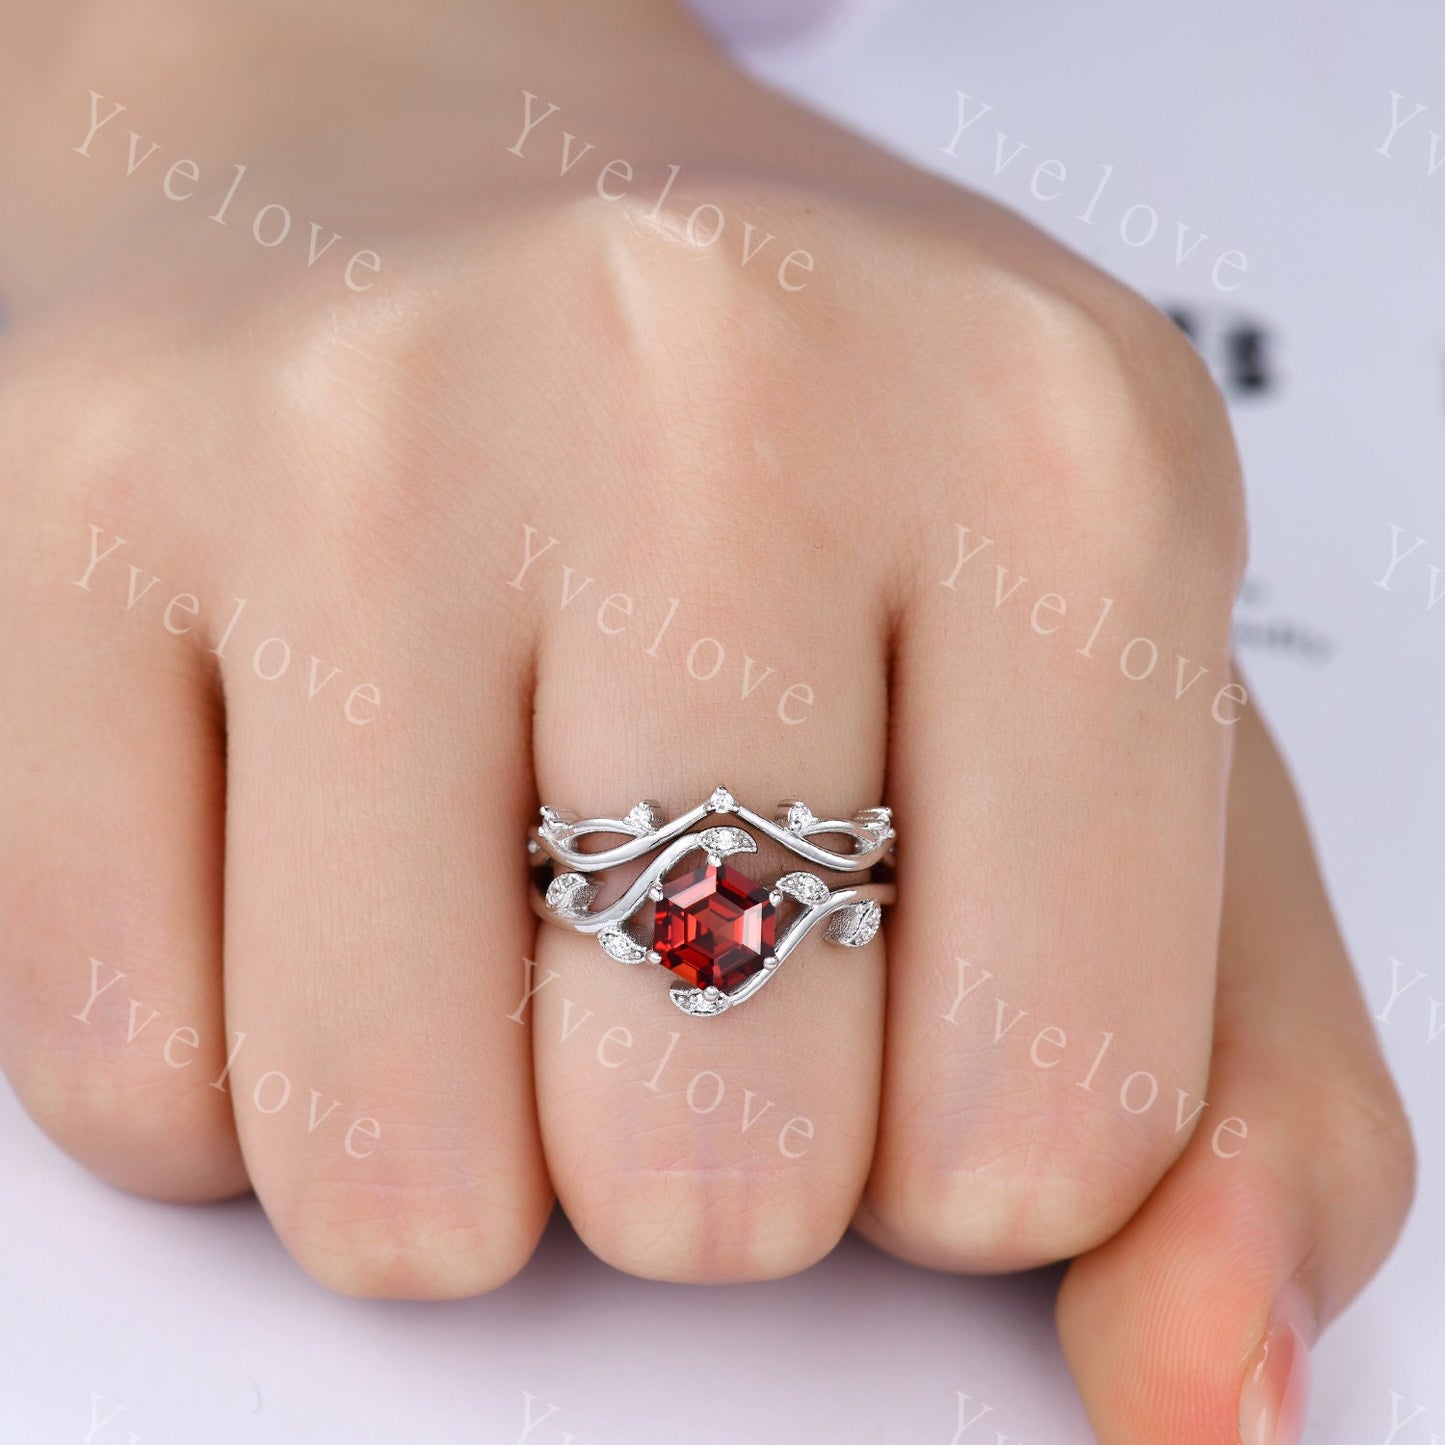 Vintage hexagon Red Garnet Ring,Vintage Sterling Silver Ring Set,Unique Garnet Engagement Ring,Twist Twig Vine Ring,Anniversary Ring Gift